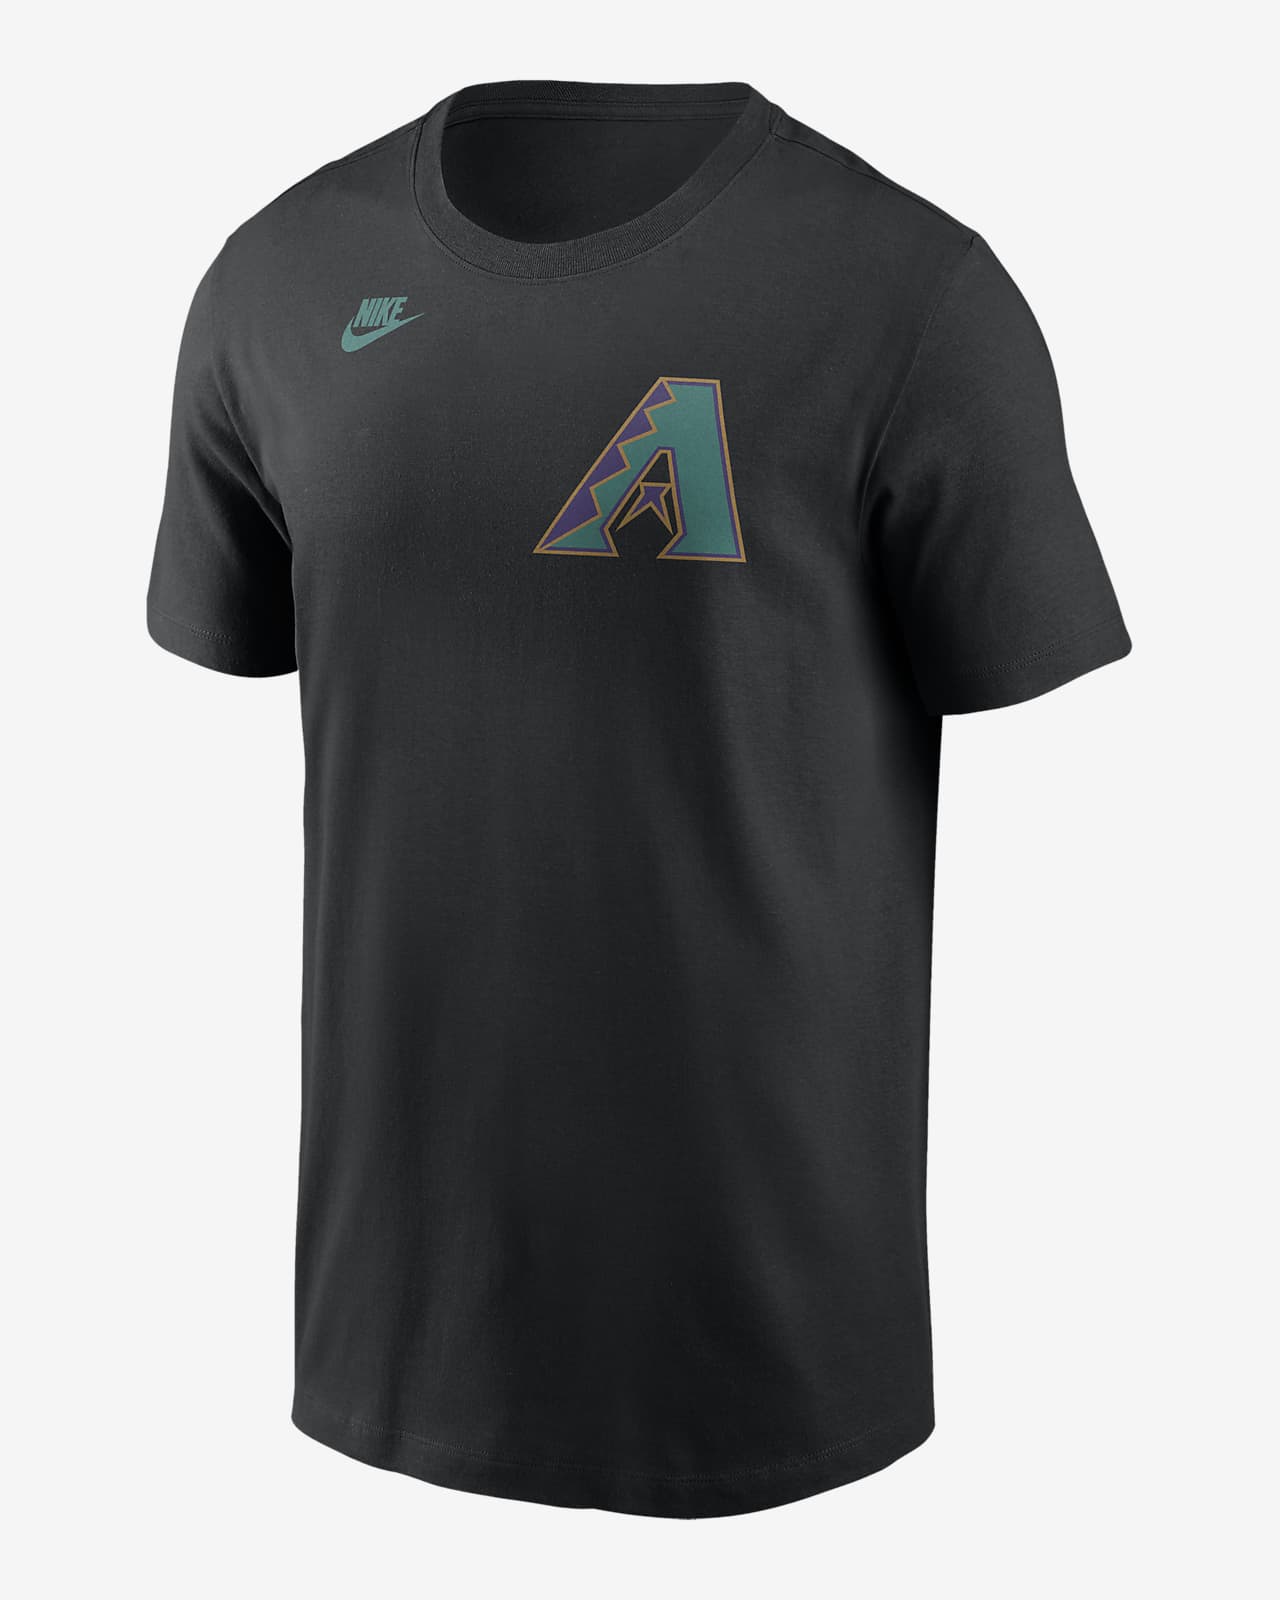 Randy Johnson Arizona Diamondbacks Cooperstown Fuse Men's Nike MLB T-Shirt